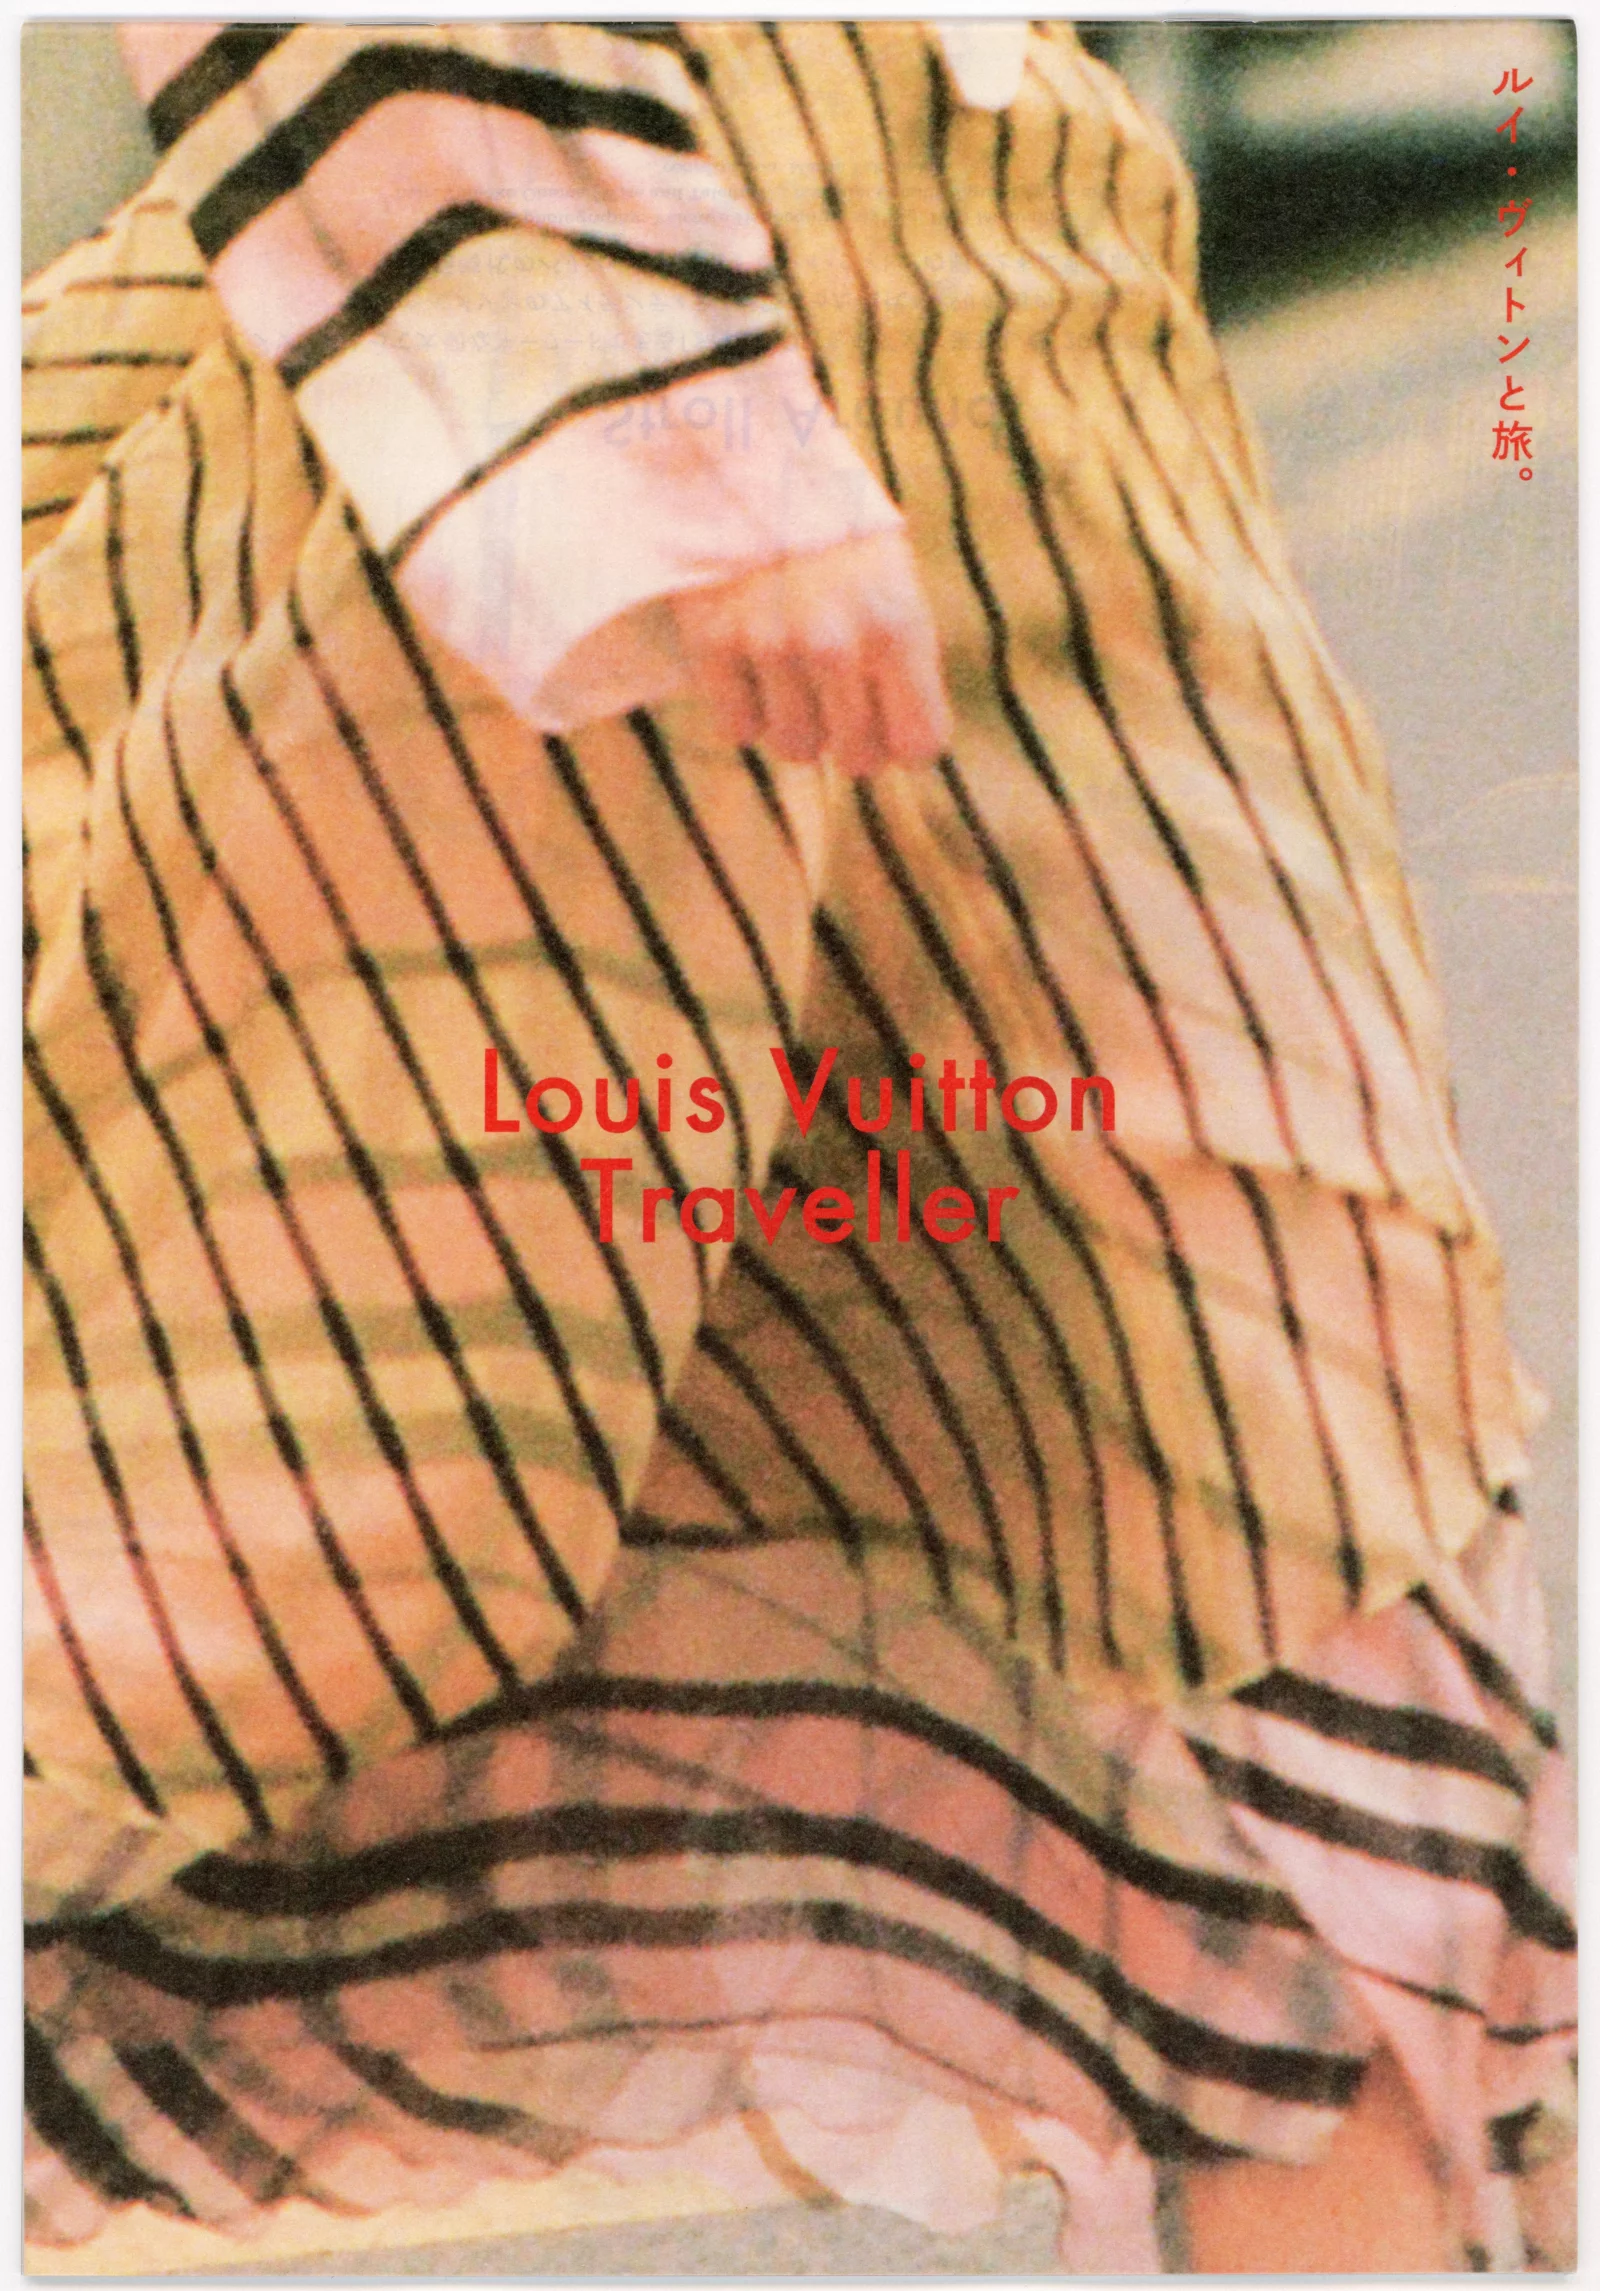 Louis Vuitton Traveller x Madame Figaro Japan 2 by Paul Maximilian SCHLOSSER